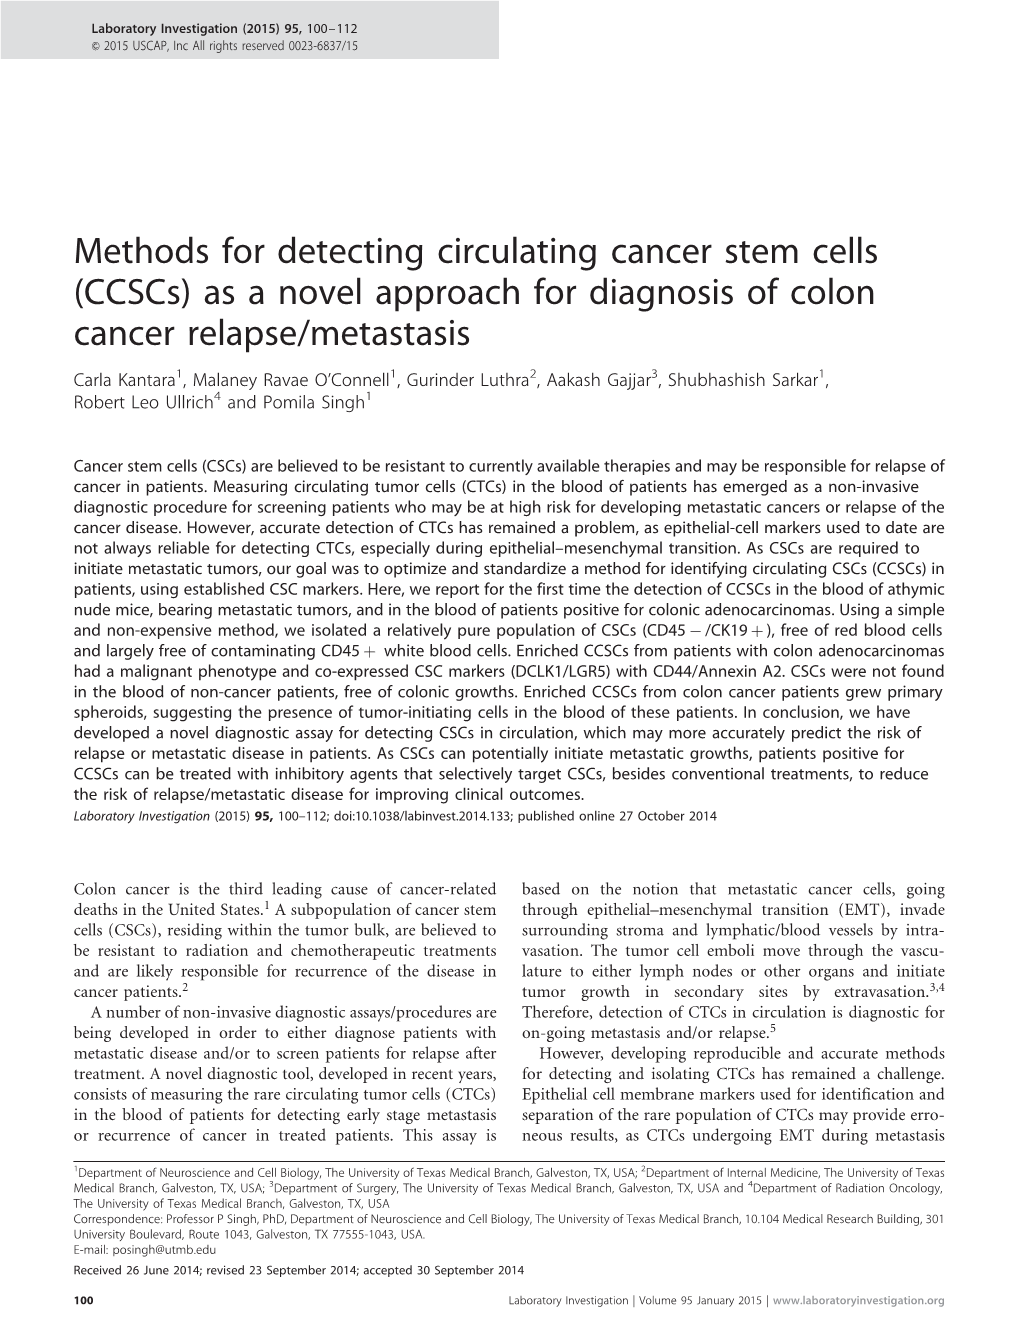 Methods for Detecting Circulating Cancer Stem Cells (Ccscs)